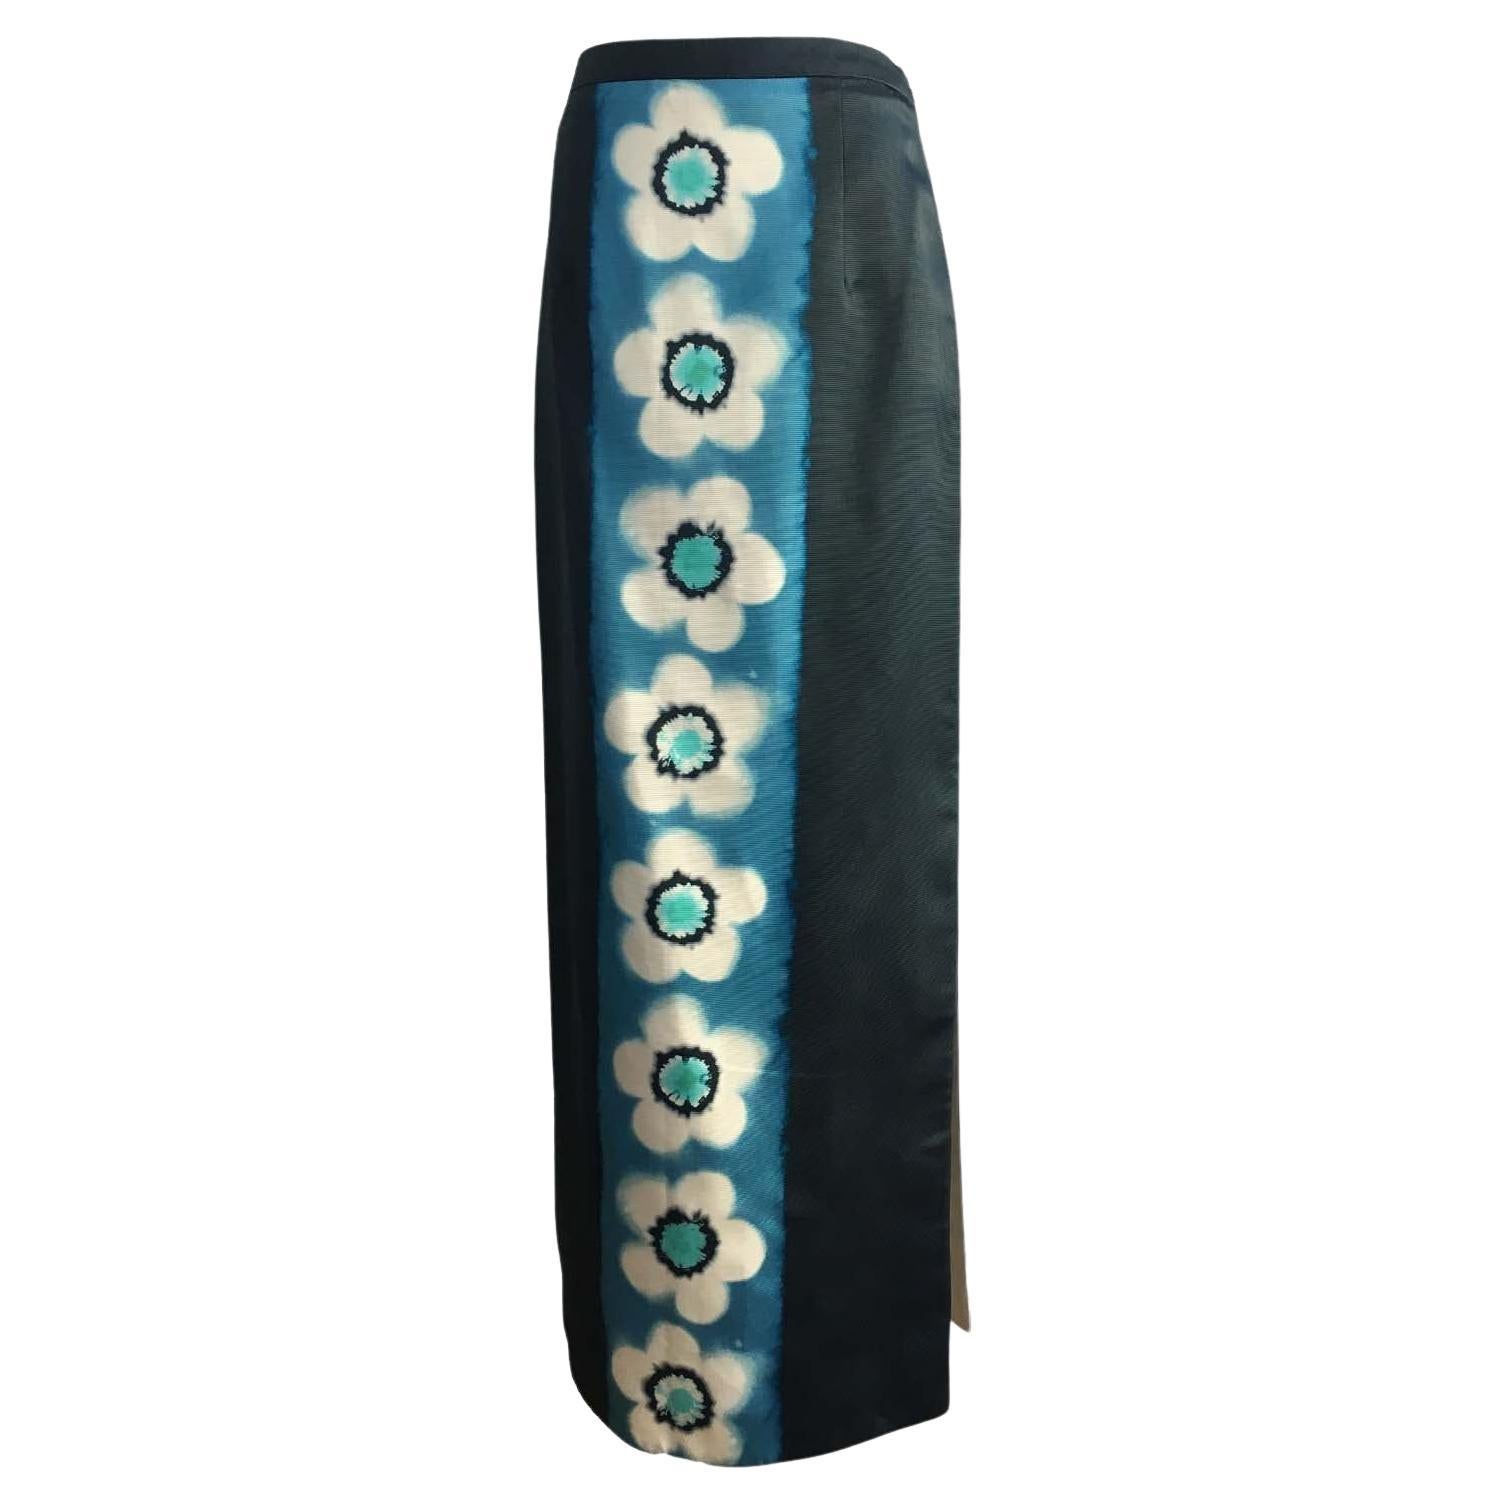 Miu Miu Kimono style navy long skirt with light blue, white, black tie dye flowers on center front. 
Unworn. Size : 38 IT
Measurements :
Waist : 70 cm
Length : 96 cm
Side slit : 49 cm
